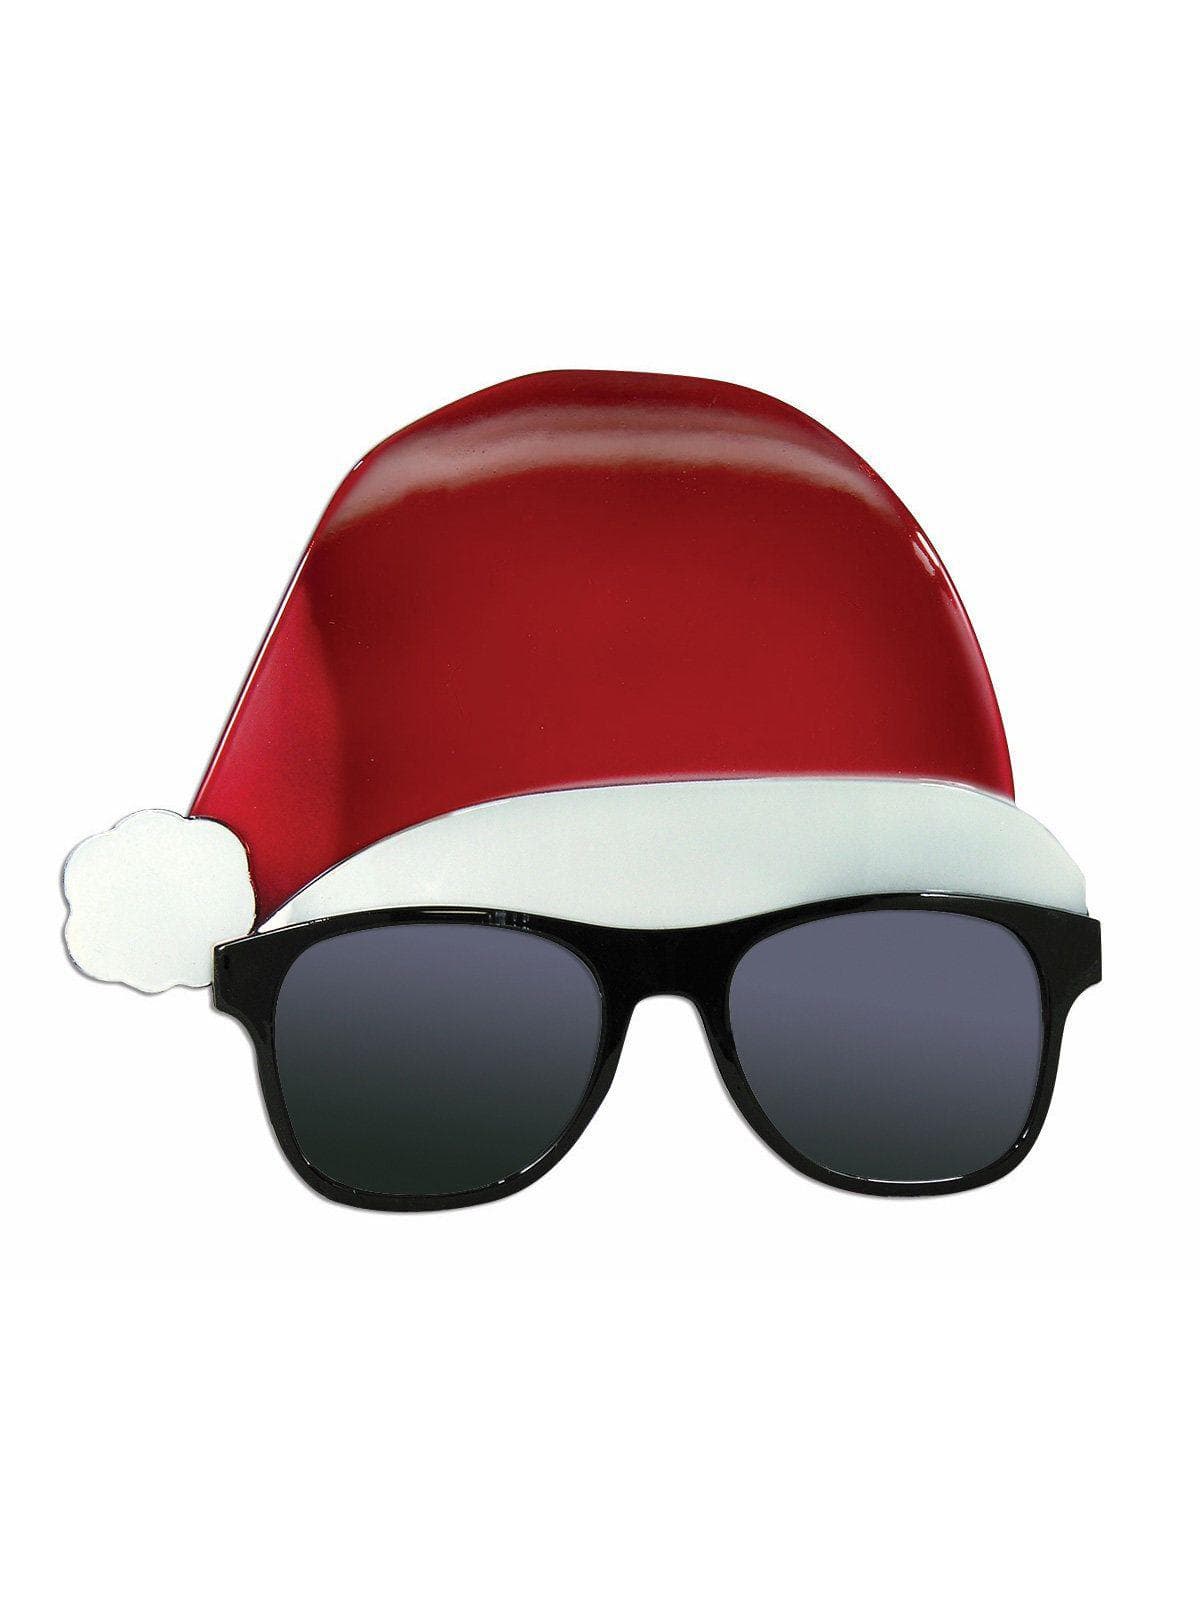 Santa Hat Sunglasses - costumes.com